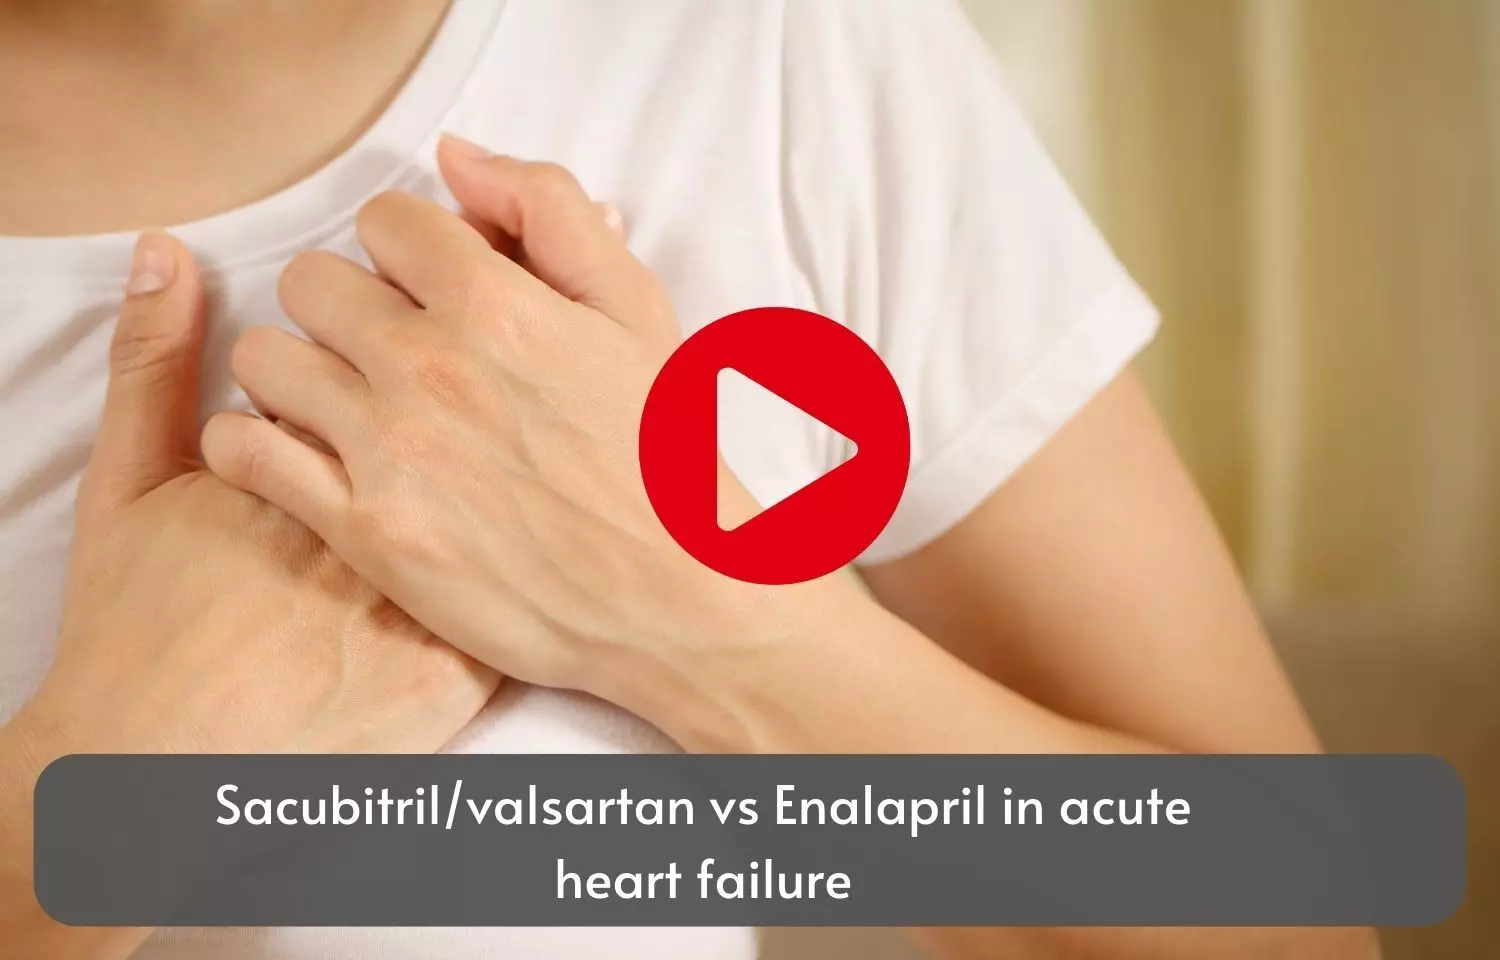 Sacubitril/valsartan vs Enalapril in acute heart failure